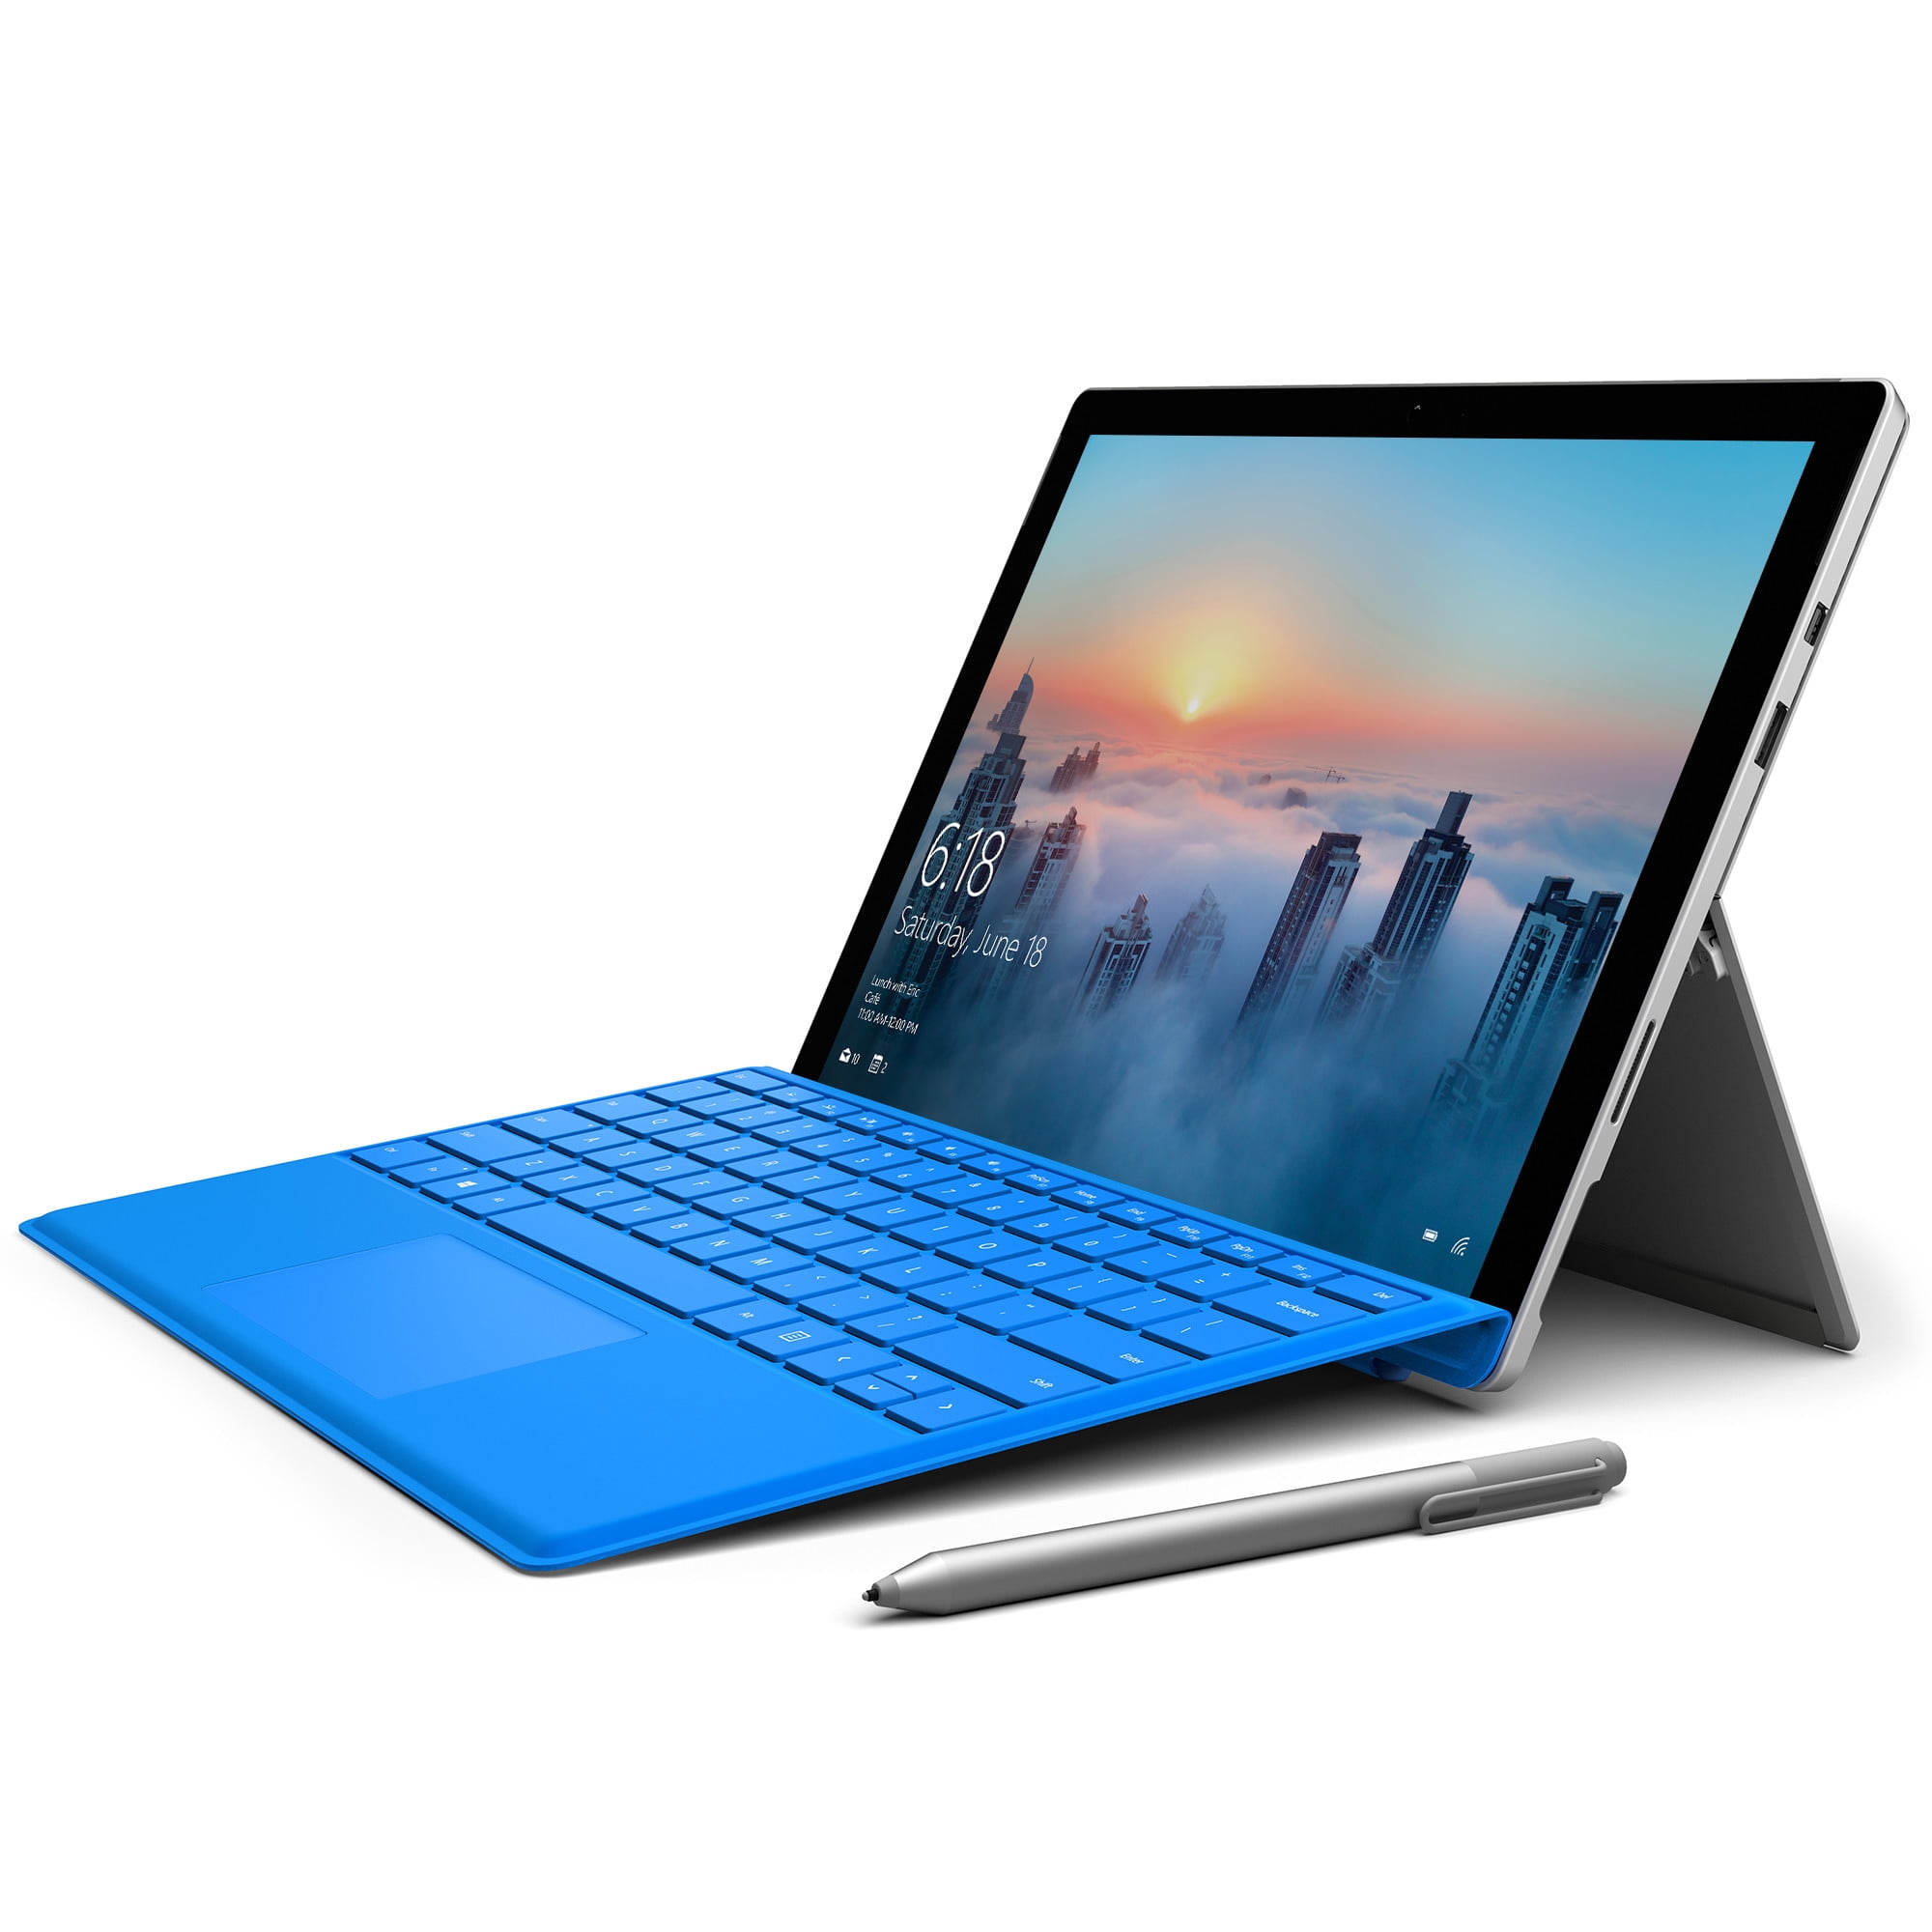 【最終値下】Surface Pro4 Core i5 256GB 8GB